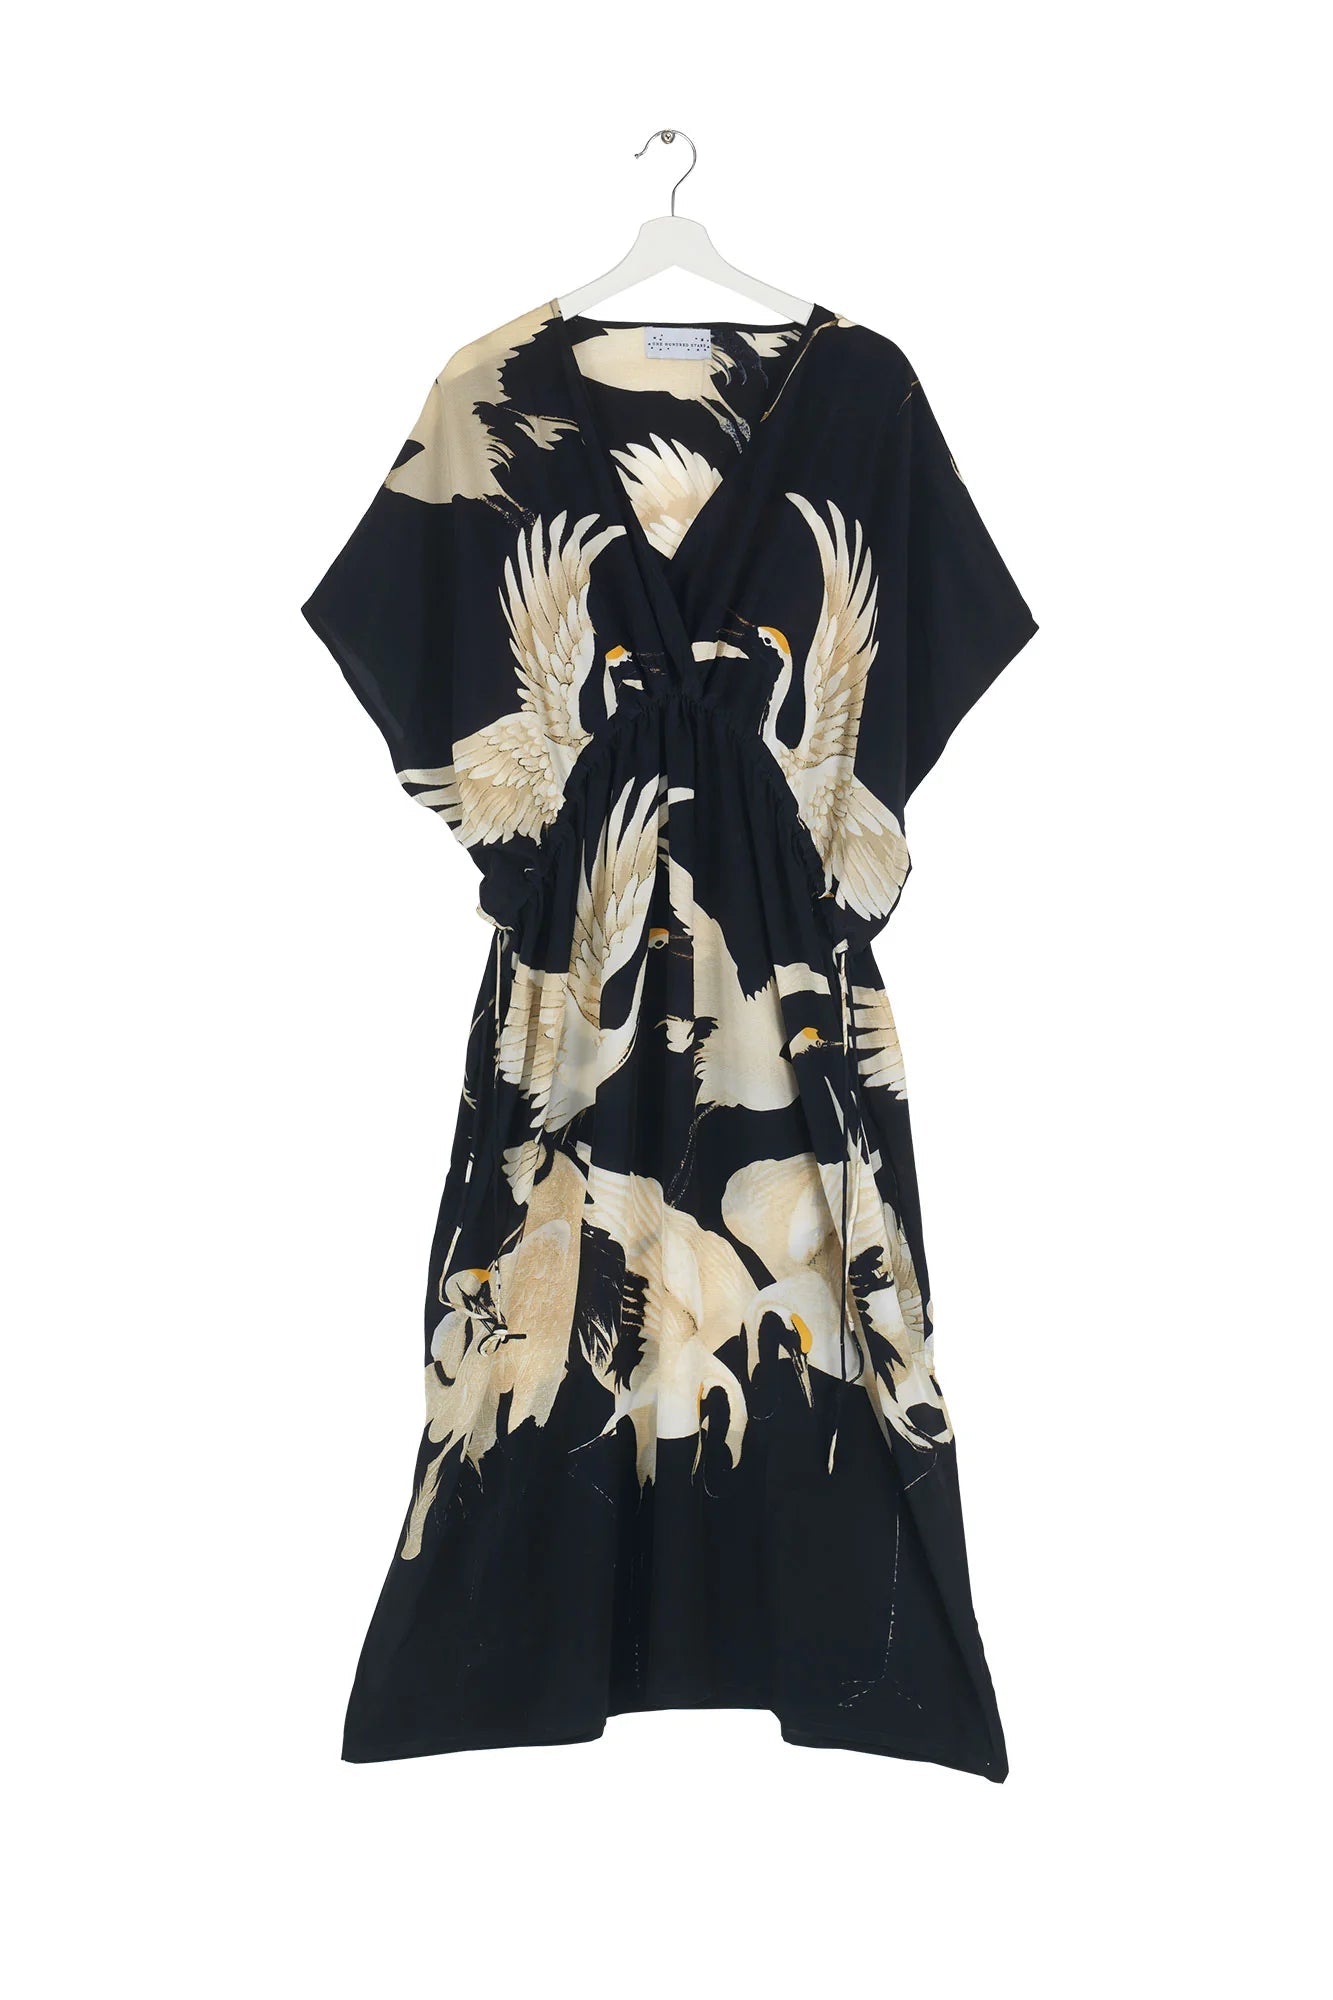 Black String Stork Dress - The Nancy Smillie Shop - Art, Jewellery & Designer Gifts Glasgow